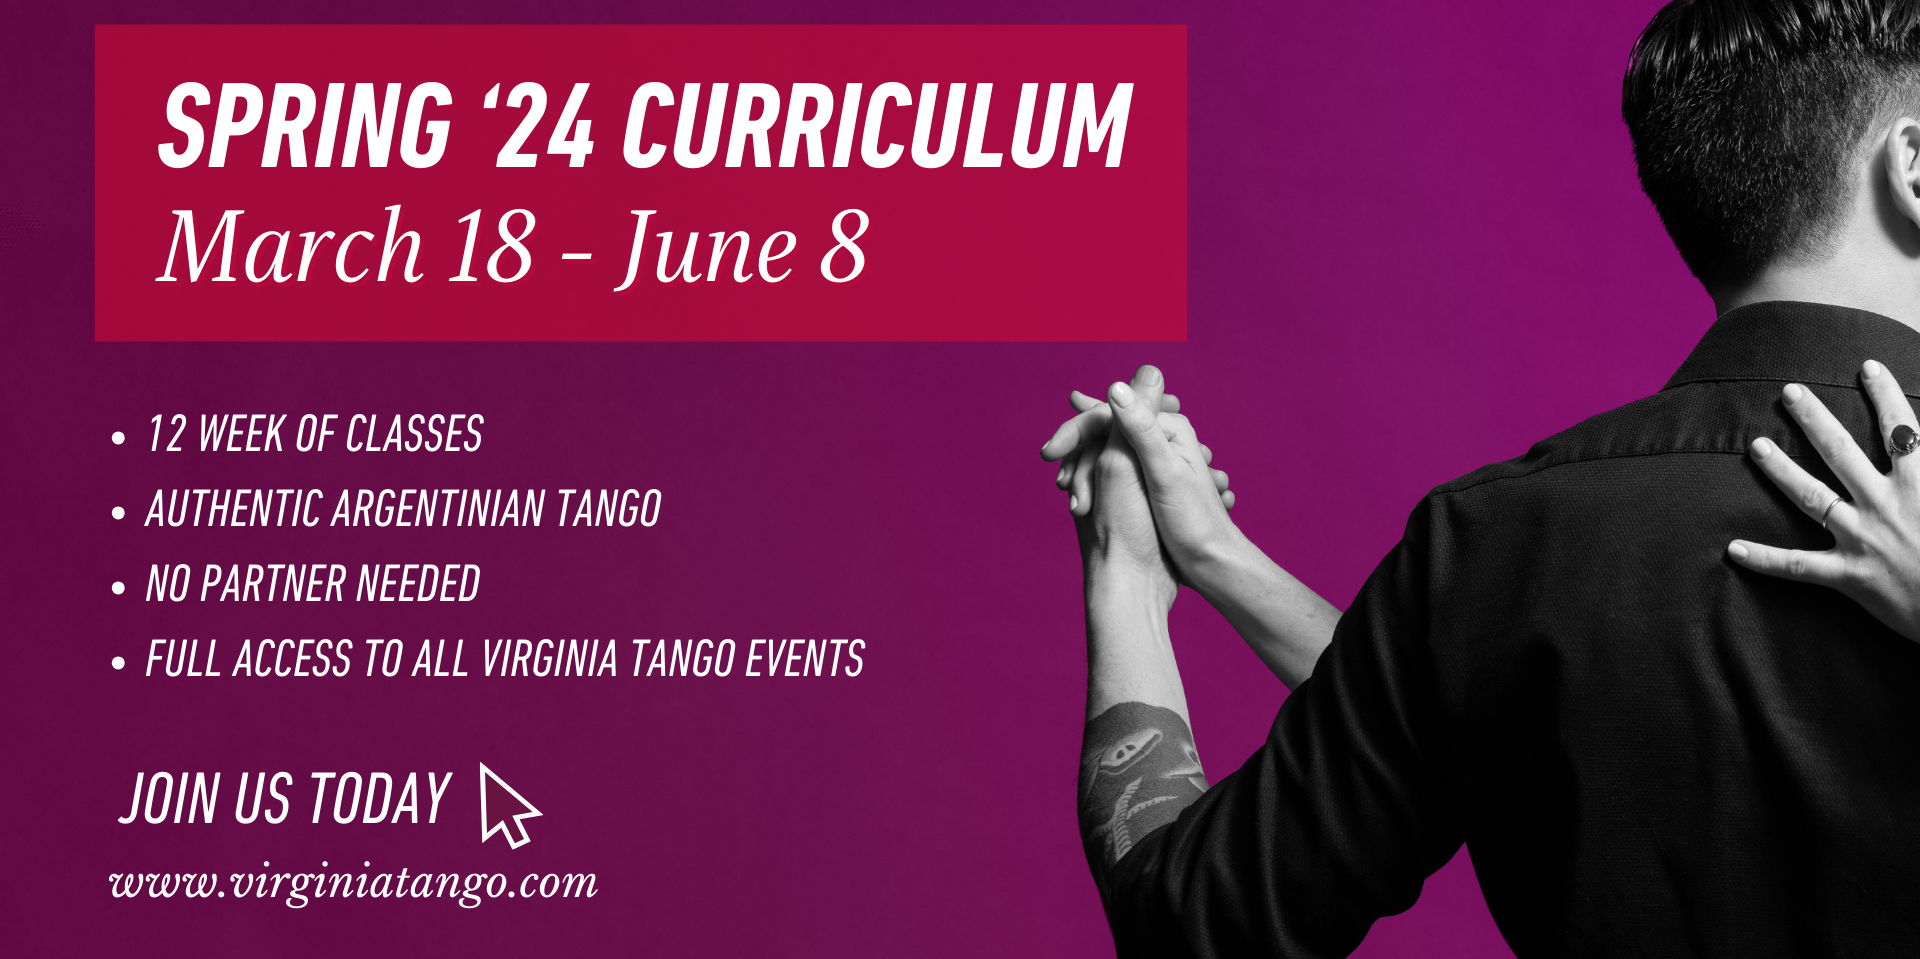 Virginia Tango SPRING ‘24 CURRICULUM promotional image